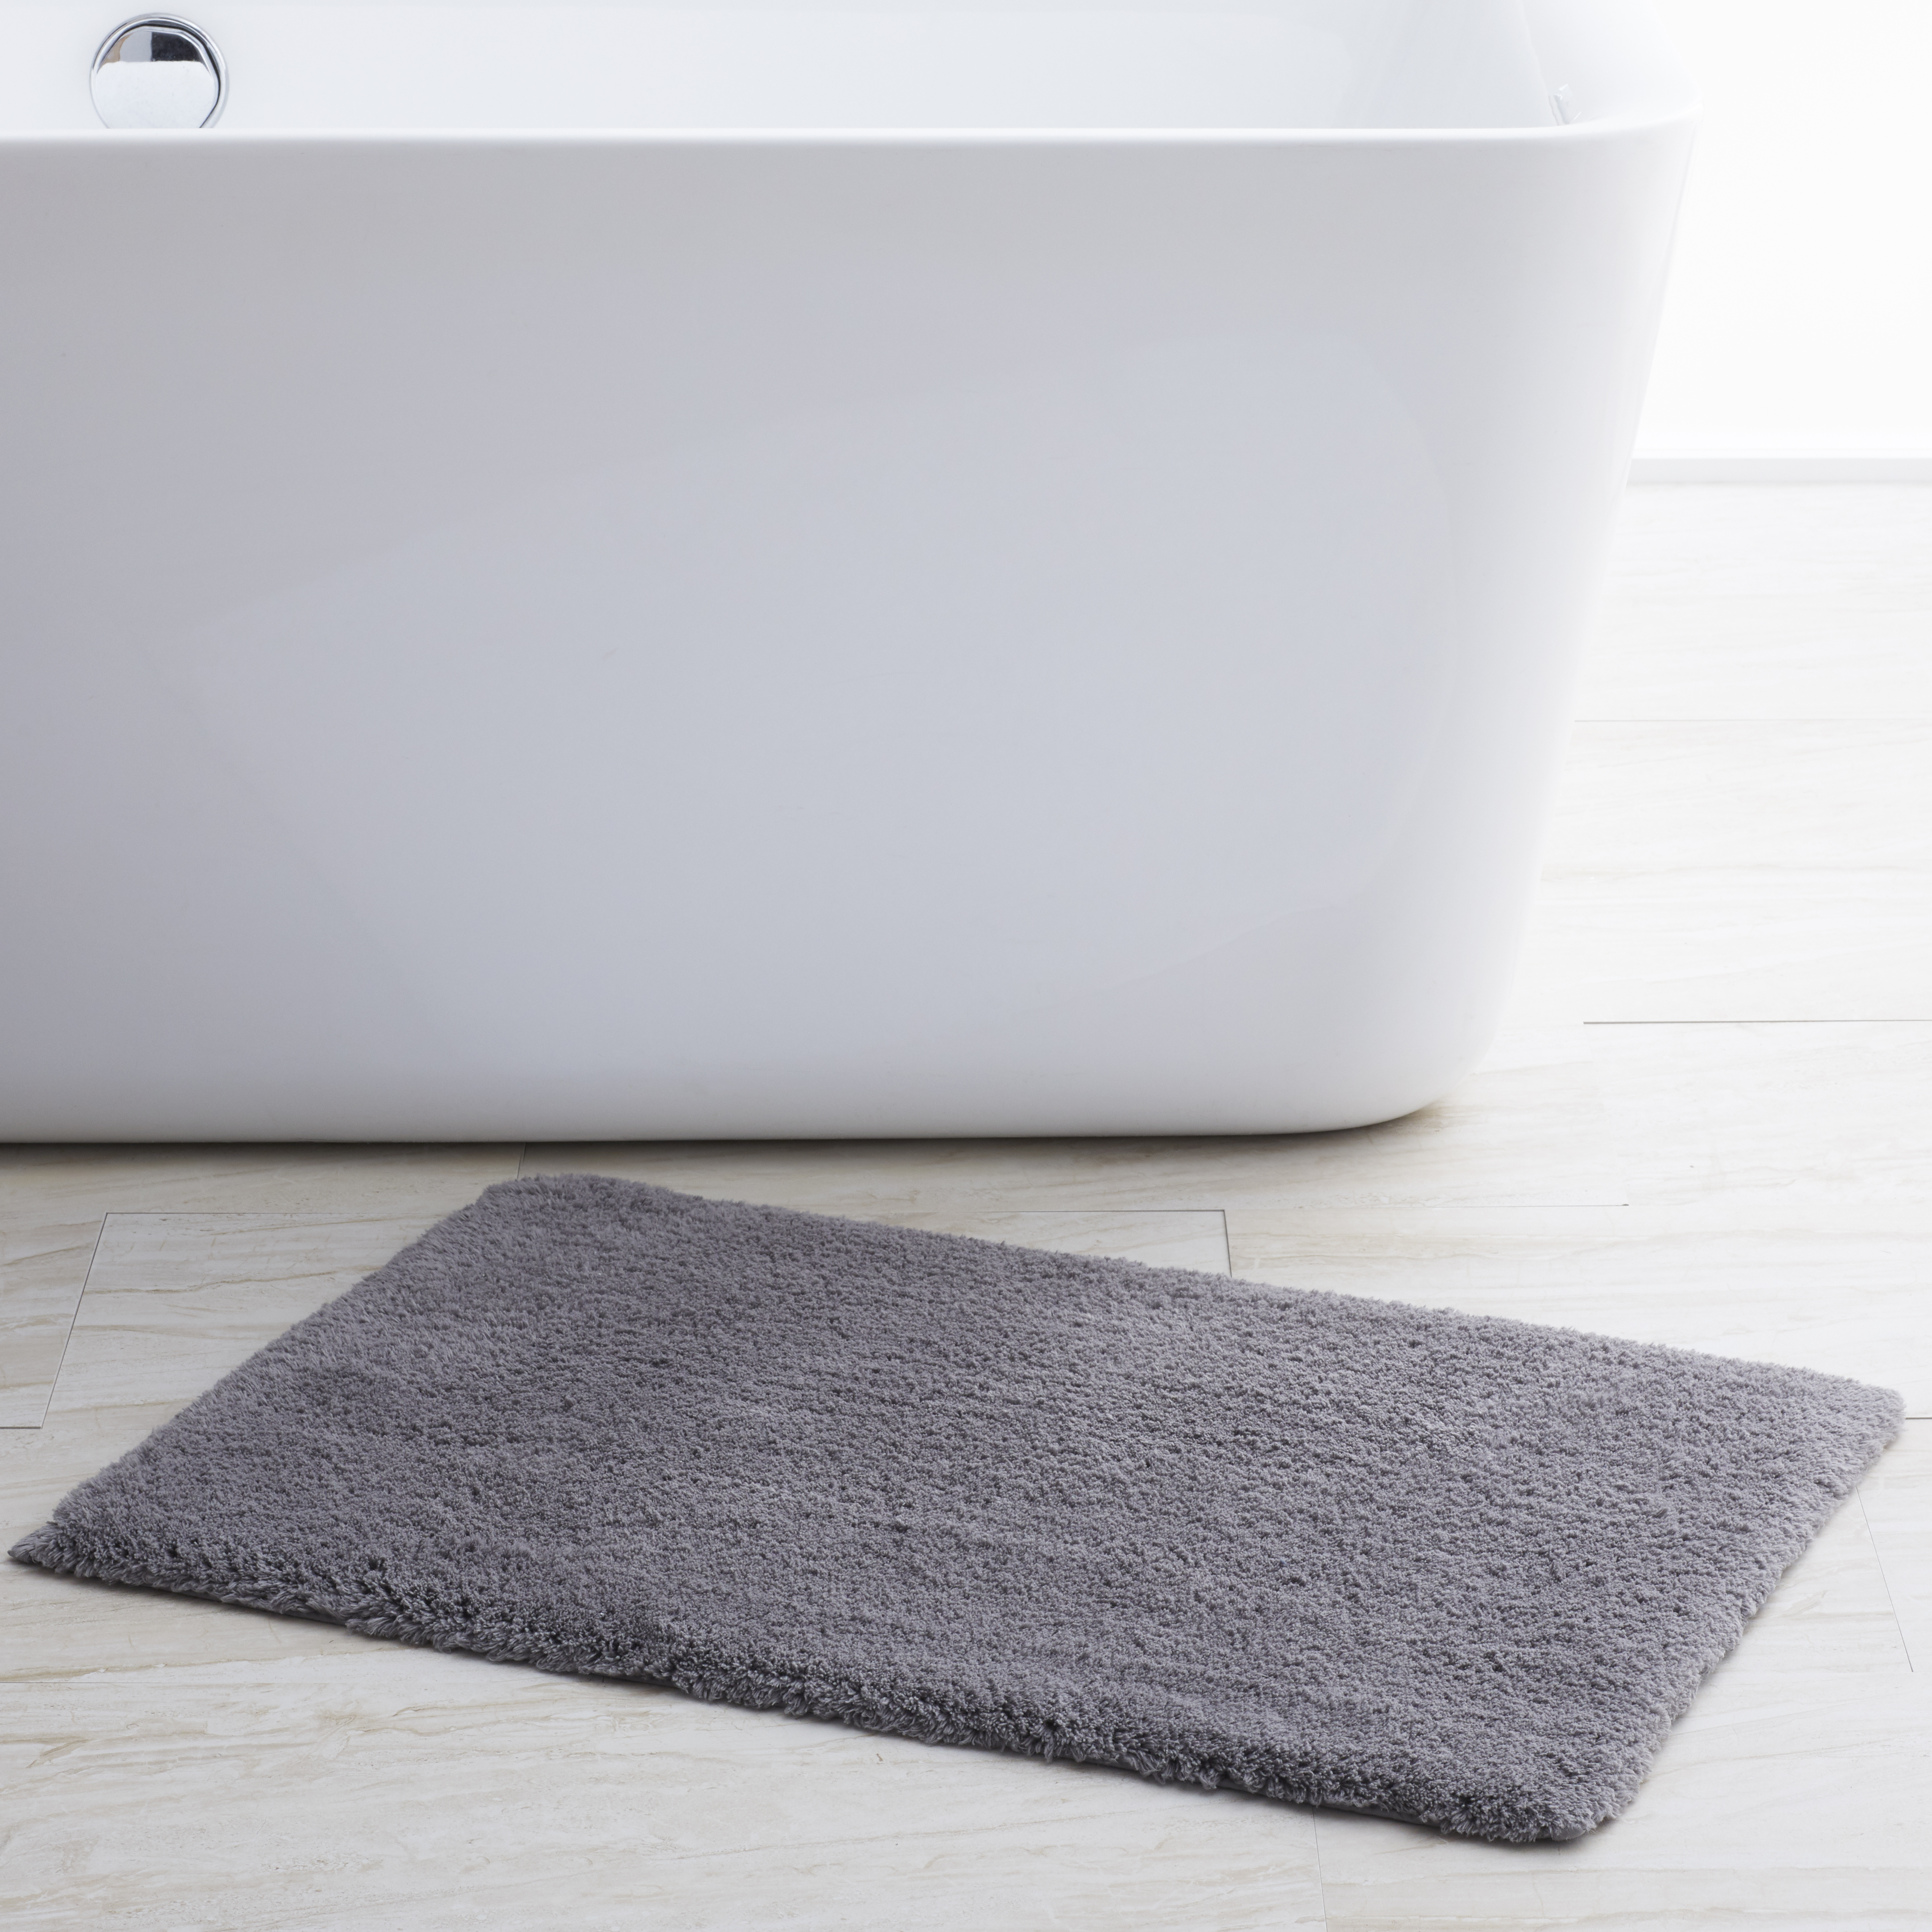 https://www.finelinens.com/media/catalog/product/2/0/205489___Indulgence_Towels_Bath_Rug.jpg